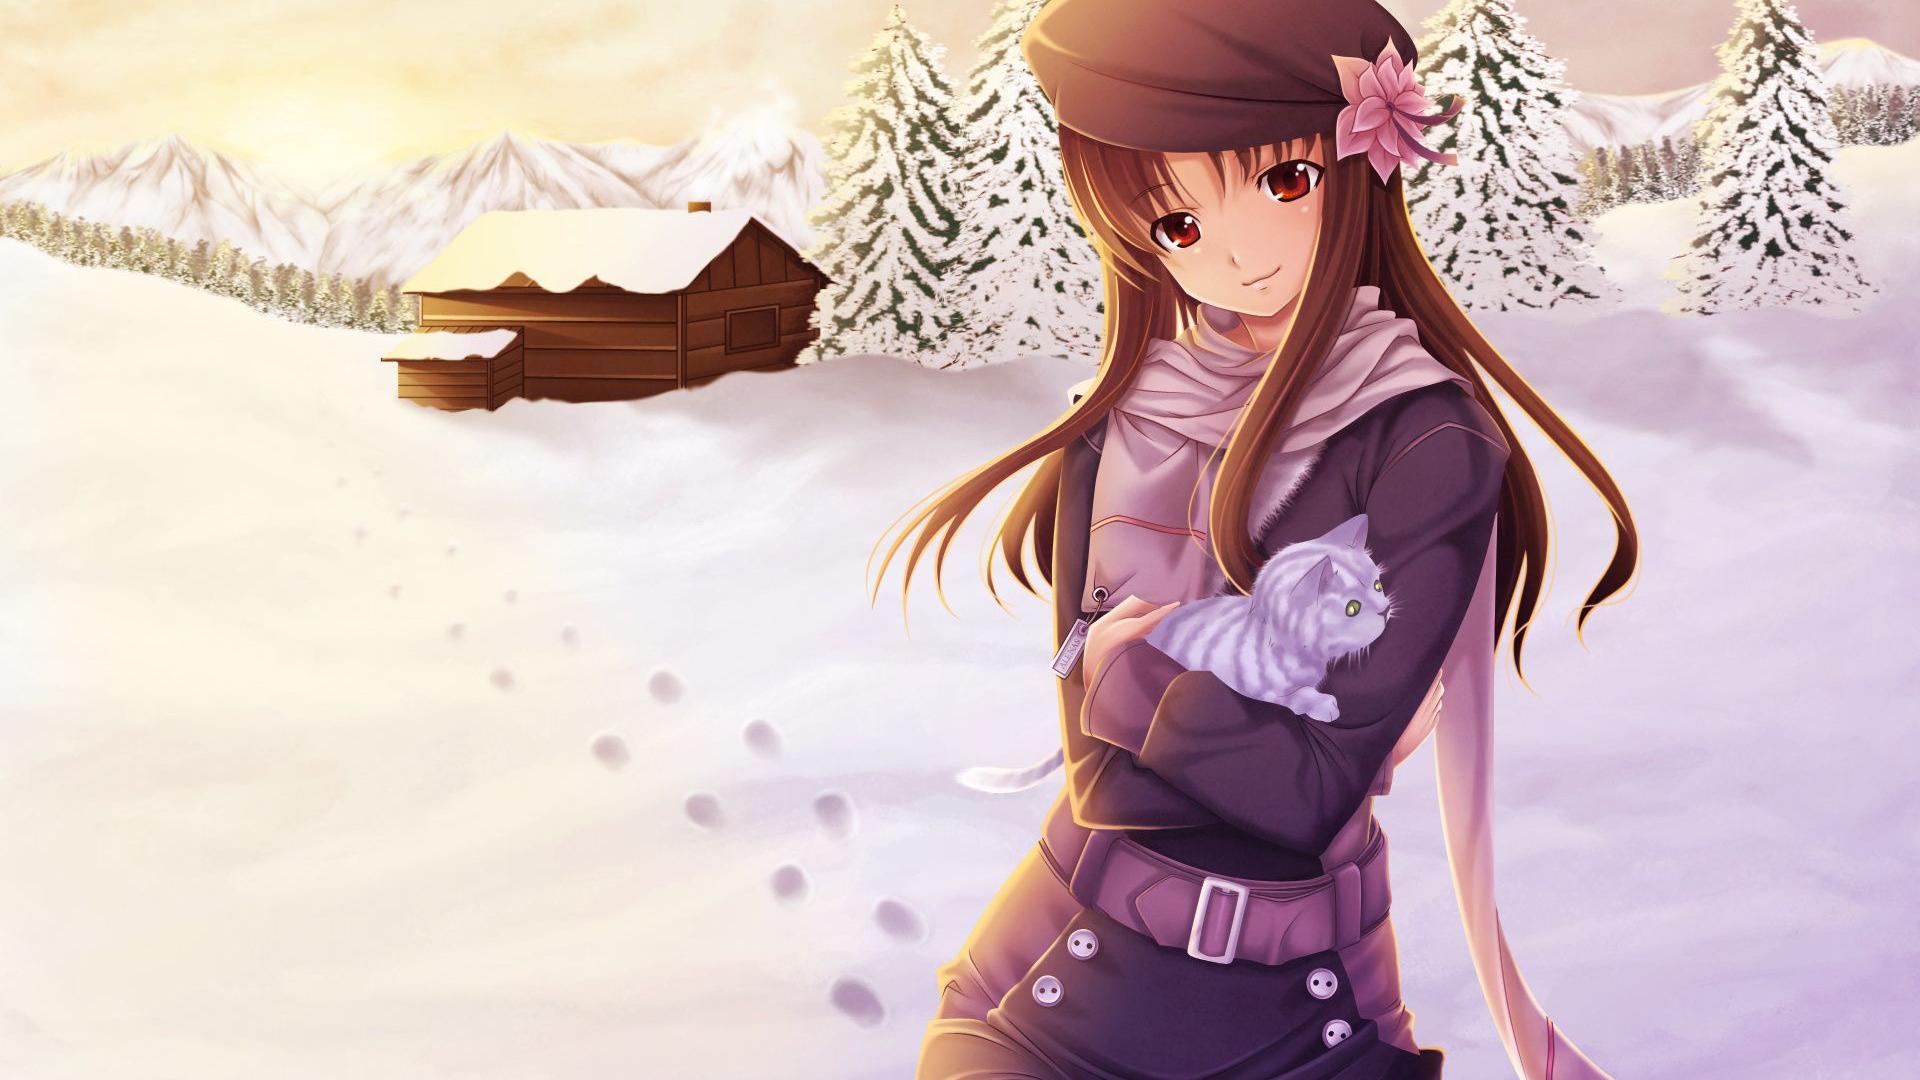 Wallpapers Korean Girl Anime Cute Sweet Winter Snow Hd 184012.8